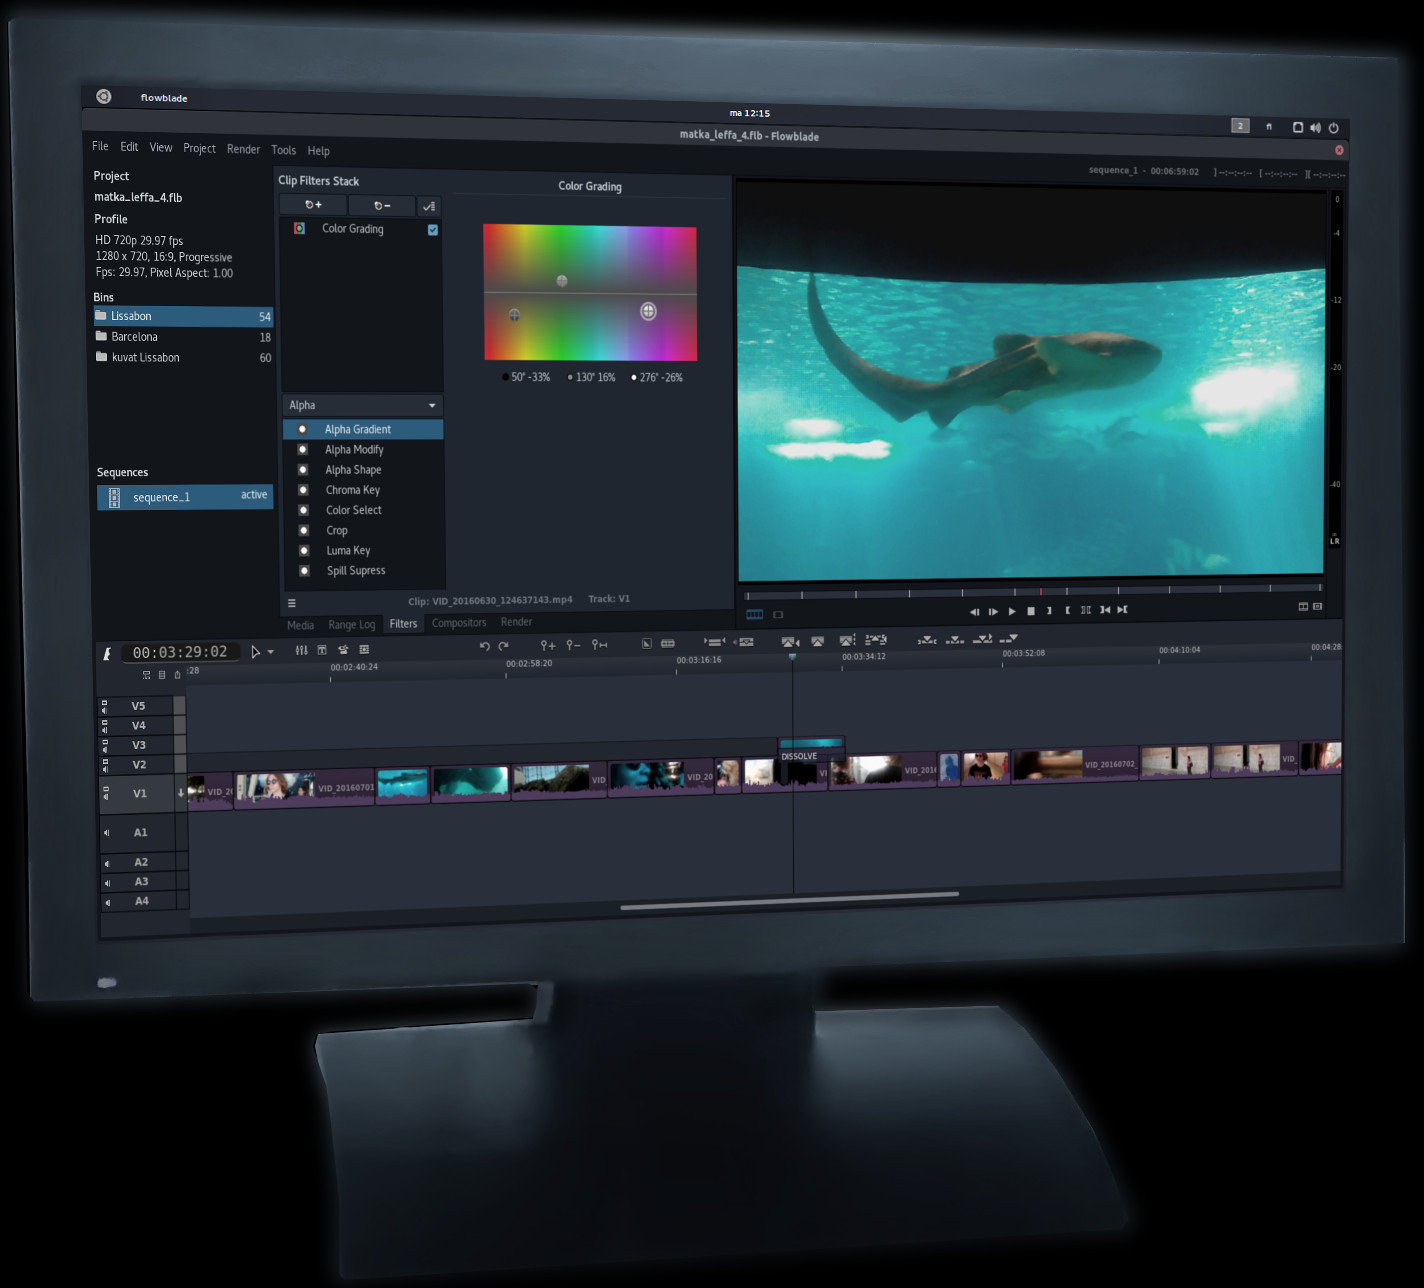 Flowblade open source video editor